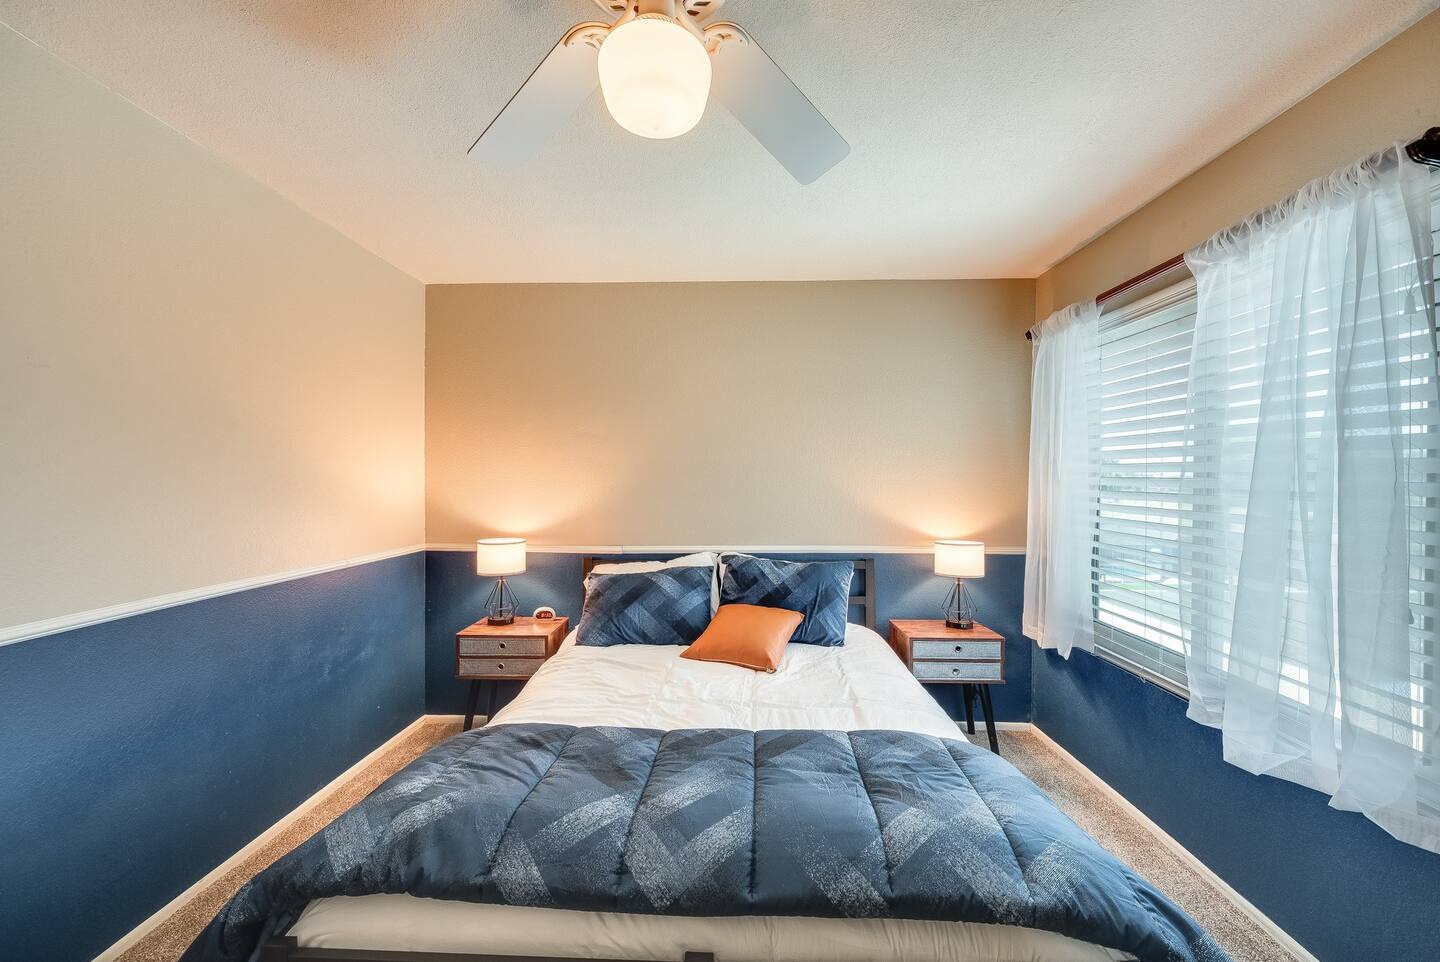 Glendale Vacation Rentals, Cahill Casa - Bedroom 1